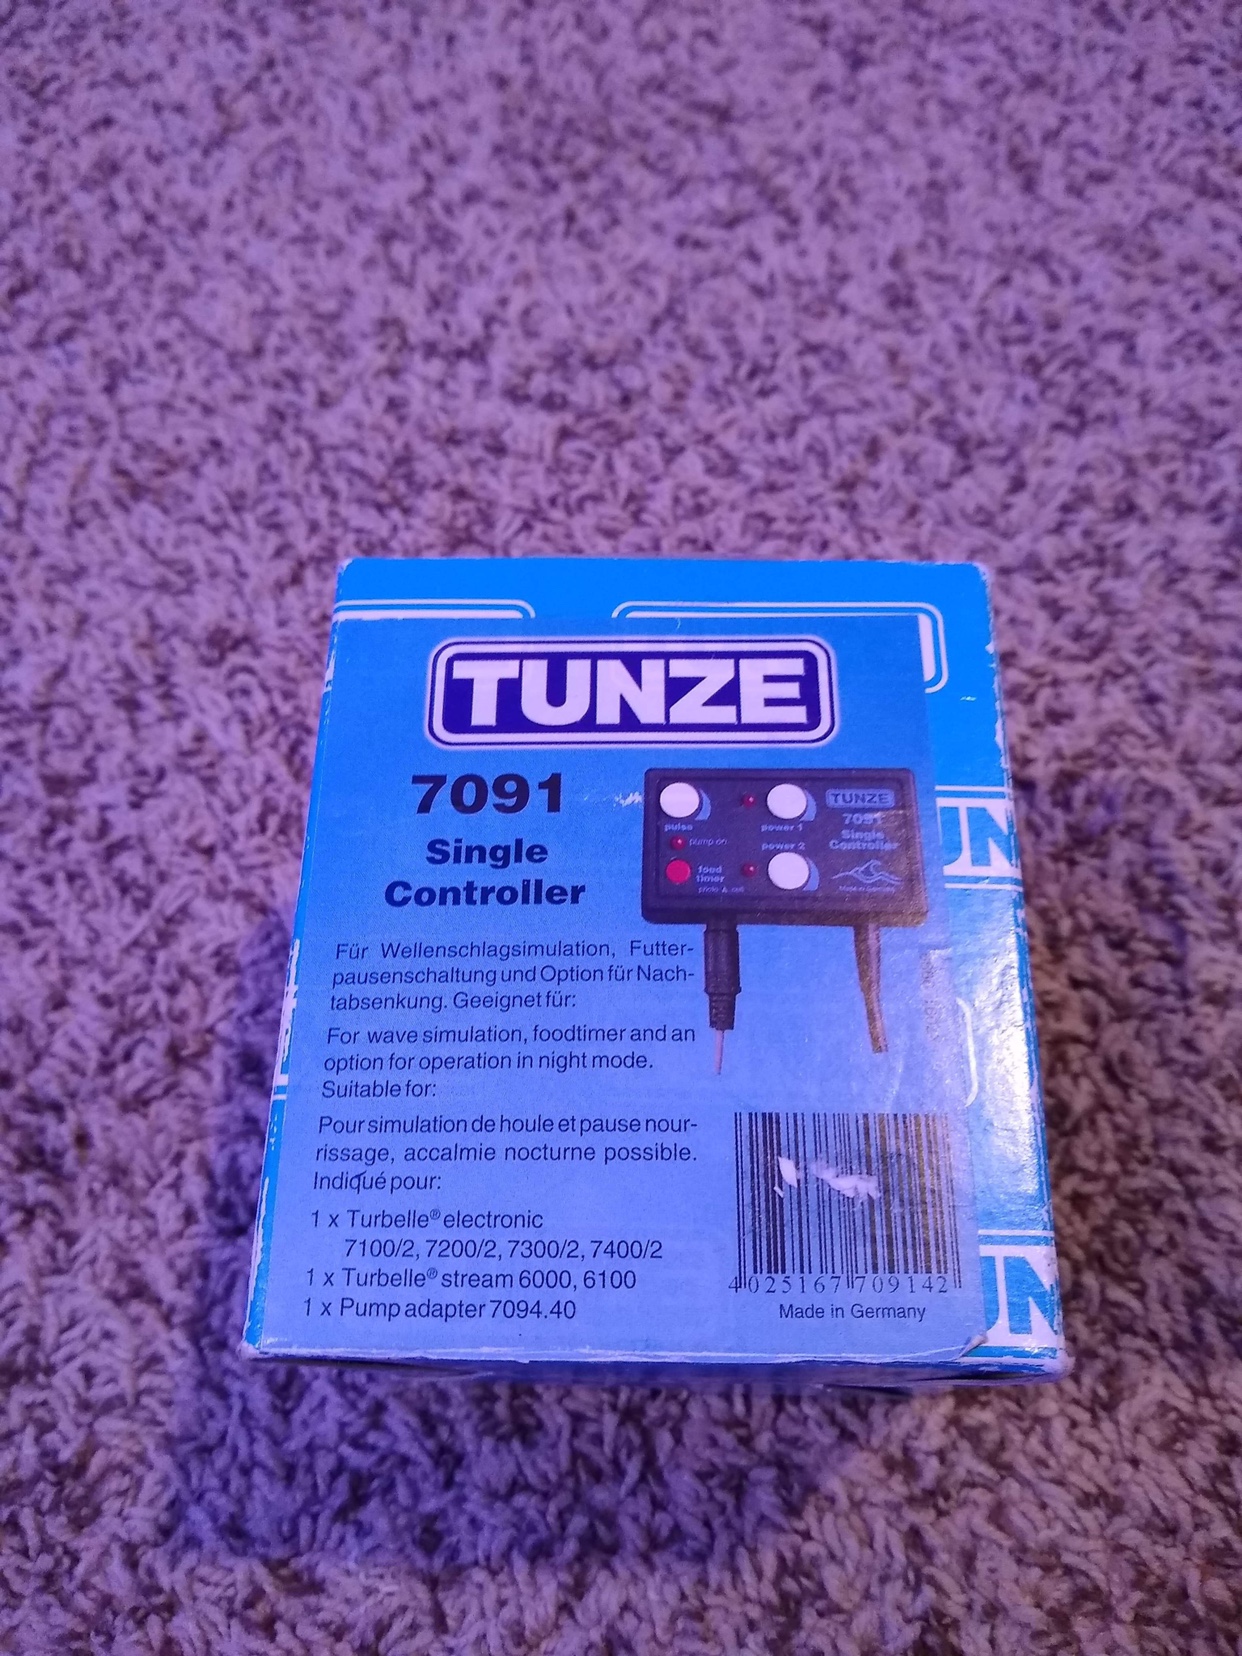 Tunze 7091 single controller